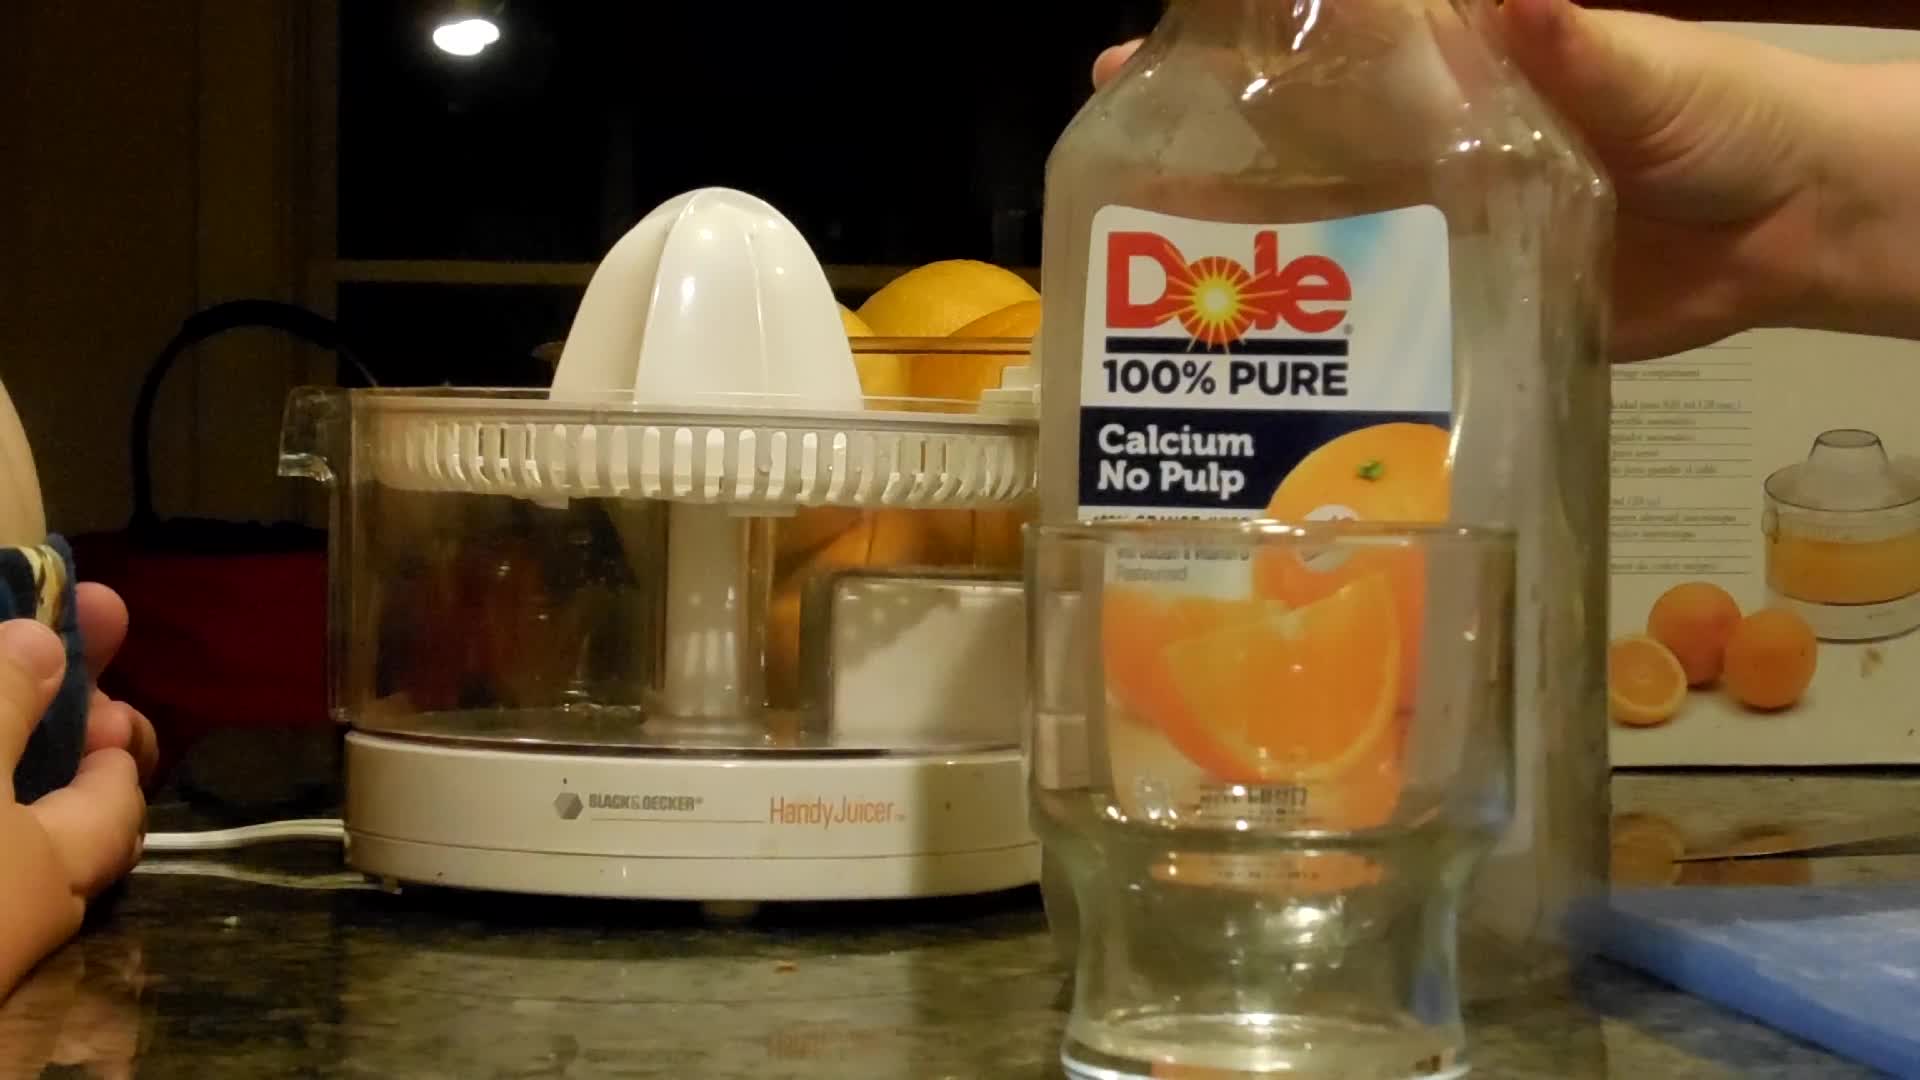 Want some orange juice?